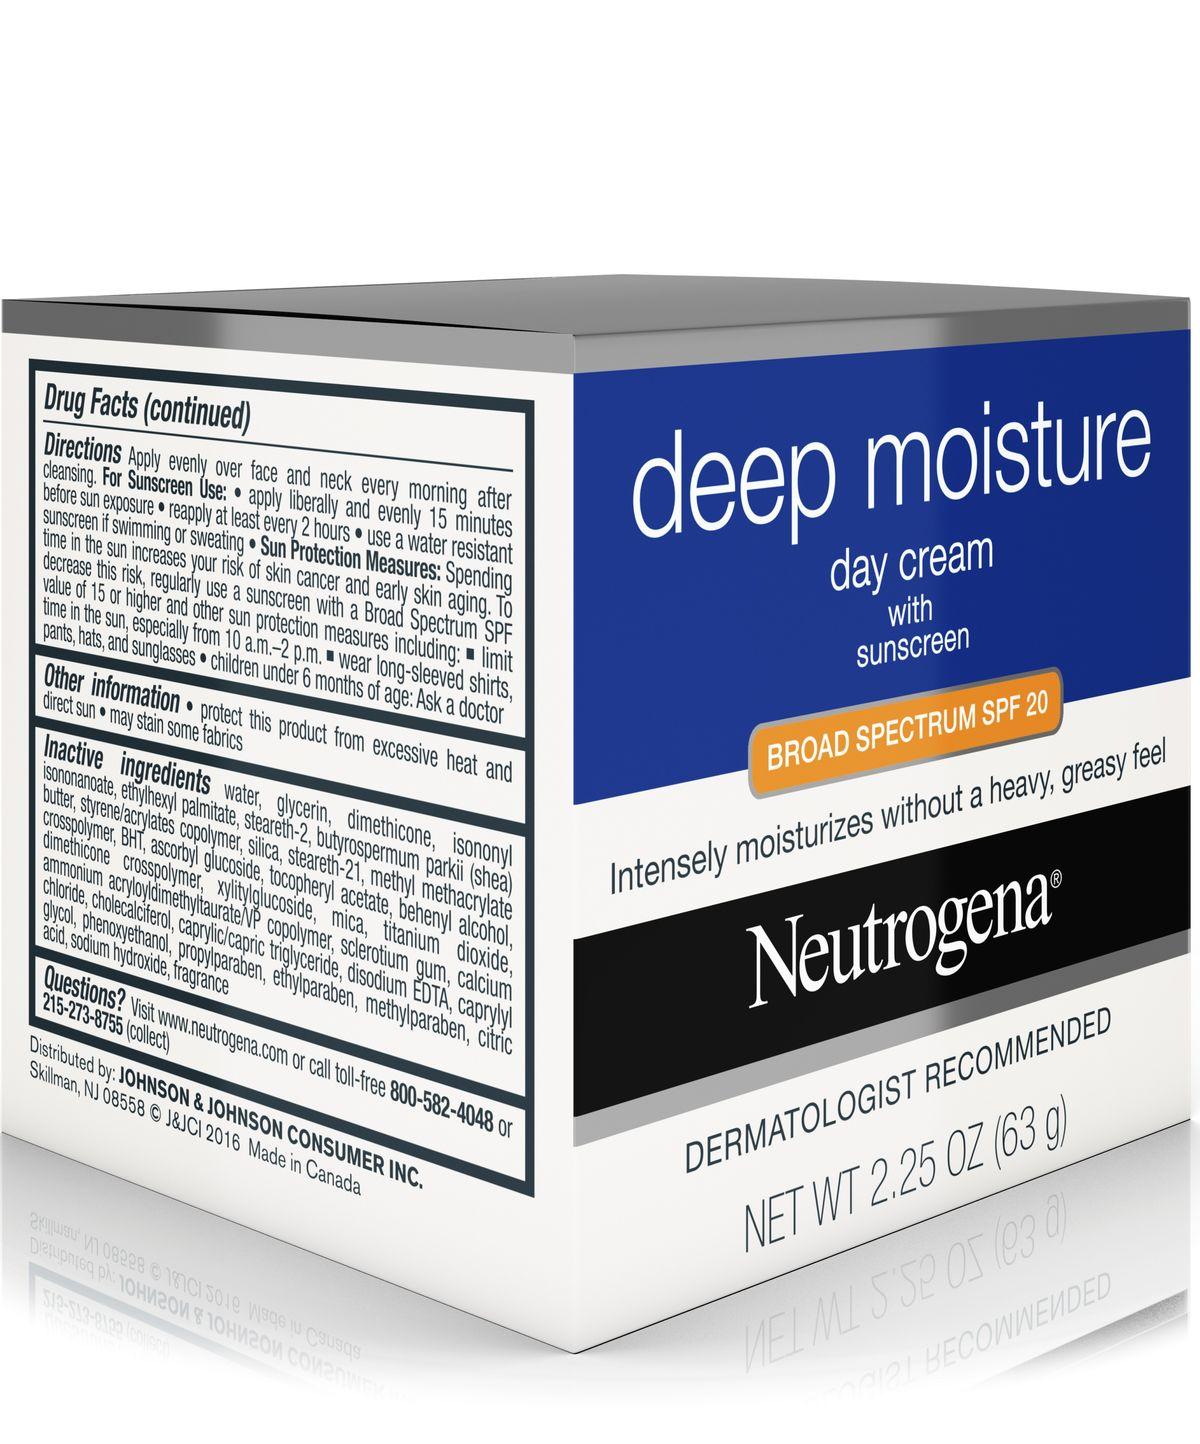 Neutrogena Deep Moisture Day Cream with Sunscreen Broad Spectrum SPF 20 (2.25 oz / 63 g)